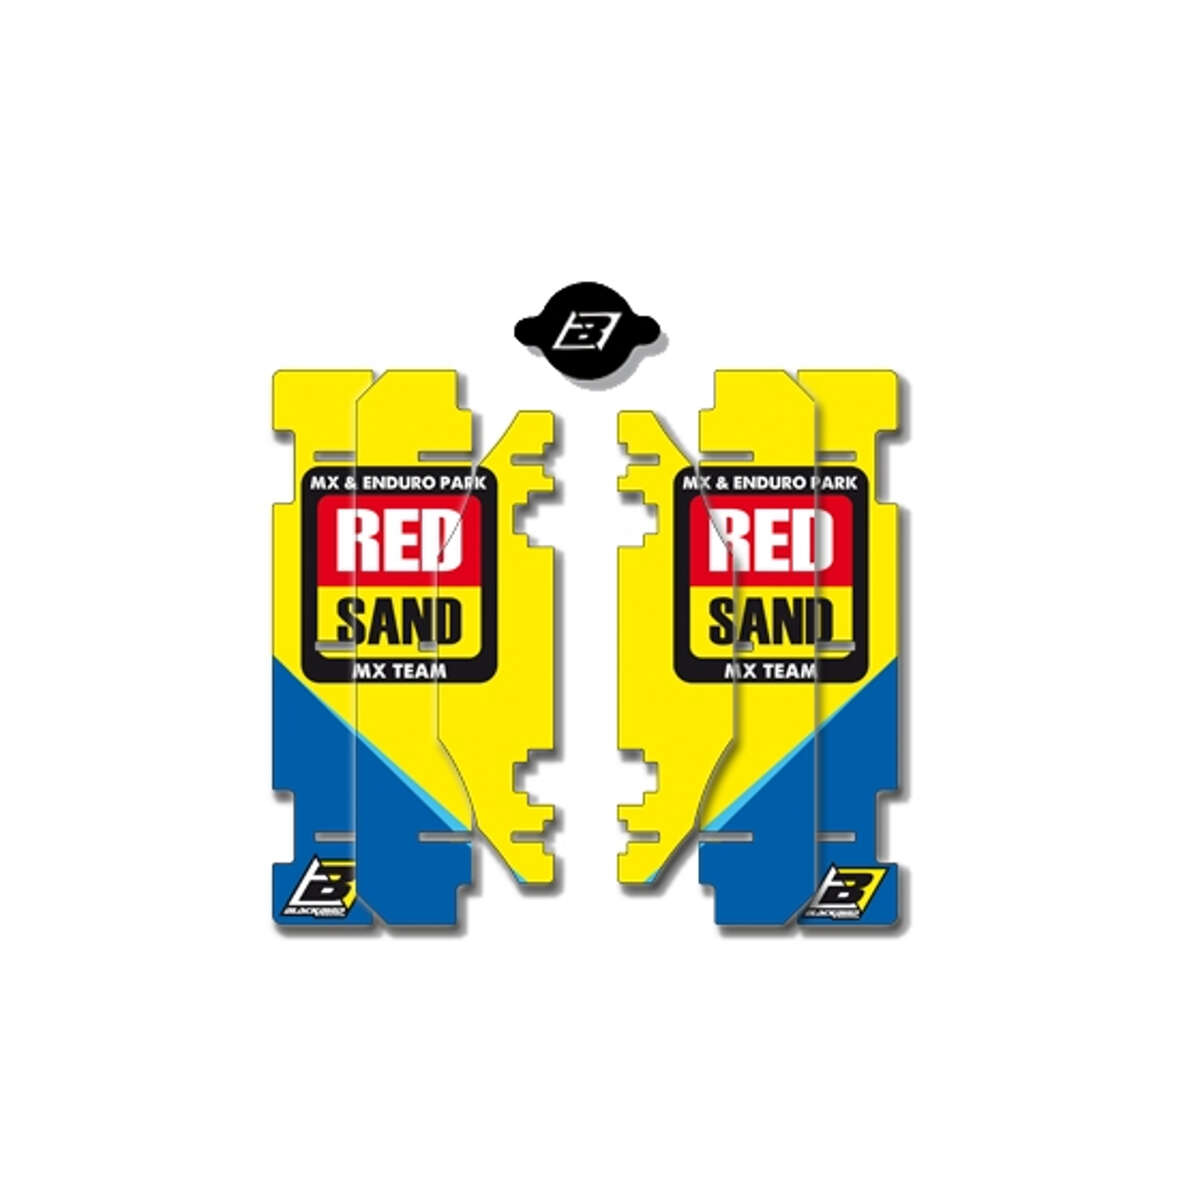 Blackbird Racing Autocollants pour Grille de Radiateur Replica Suzuki RM 125/250 01-17, World MXGP '17, Yellow/Blue